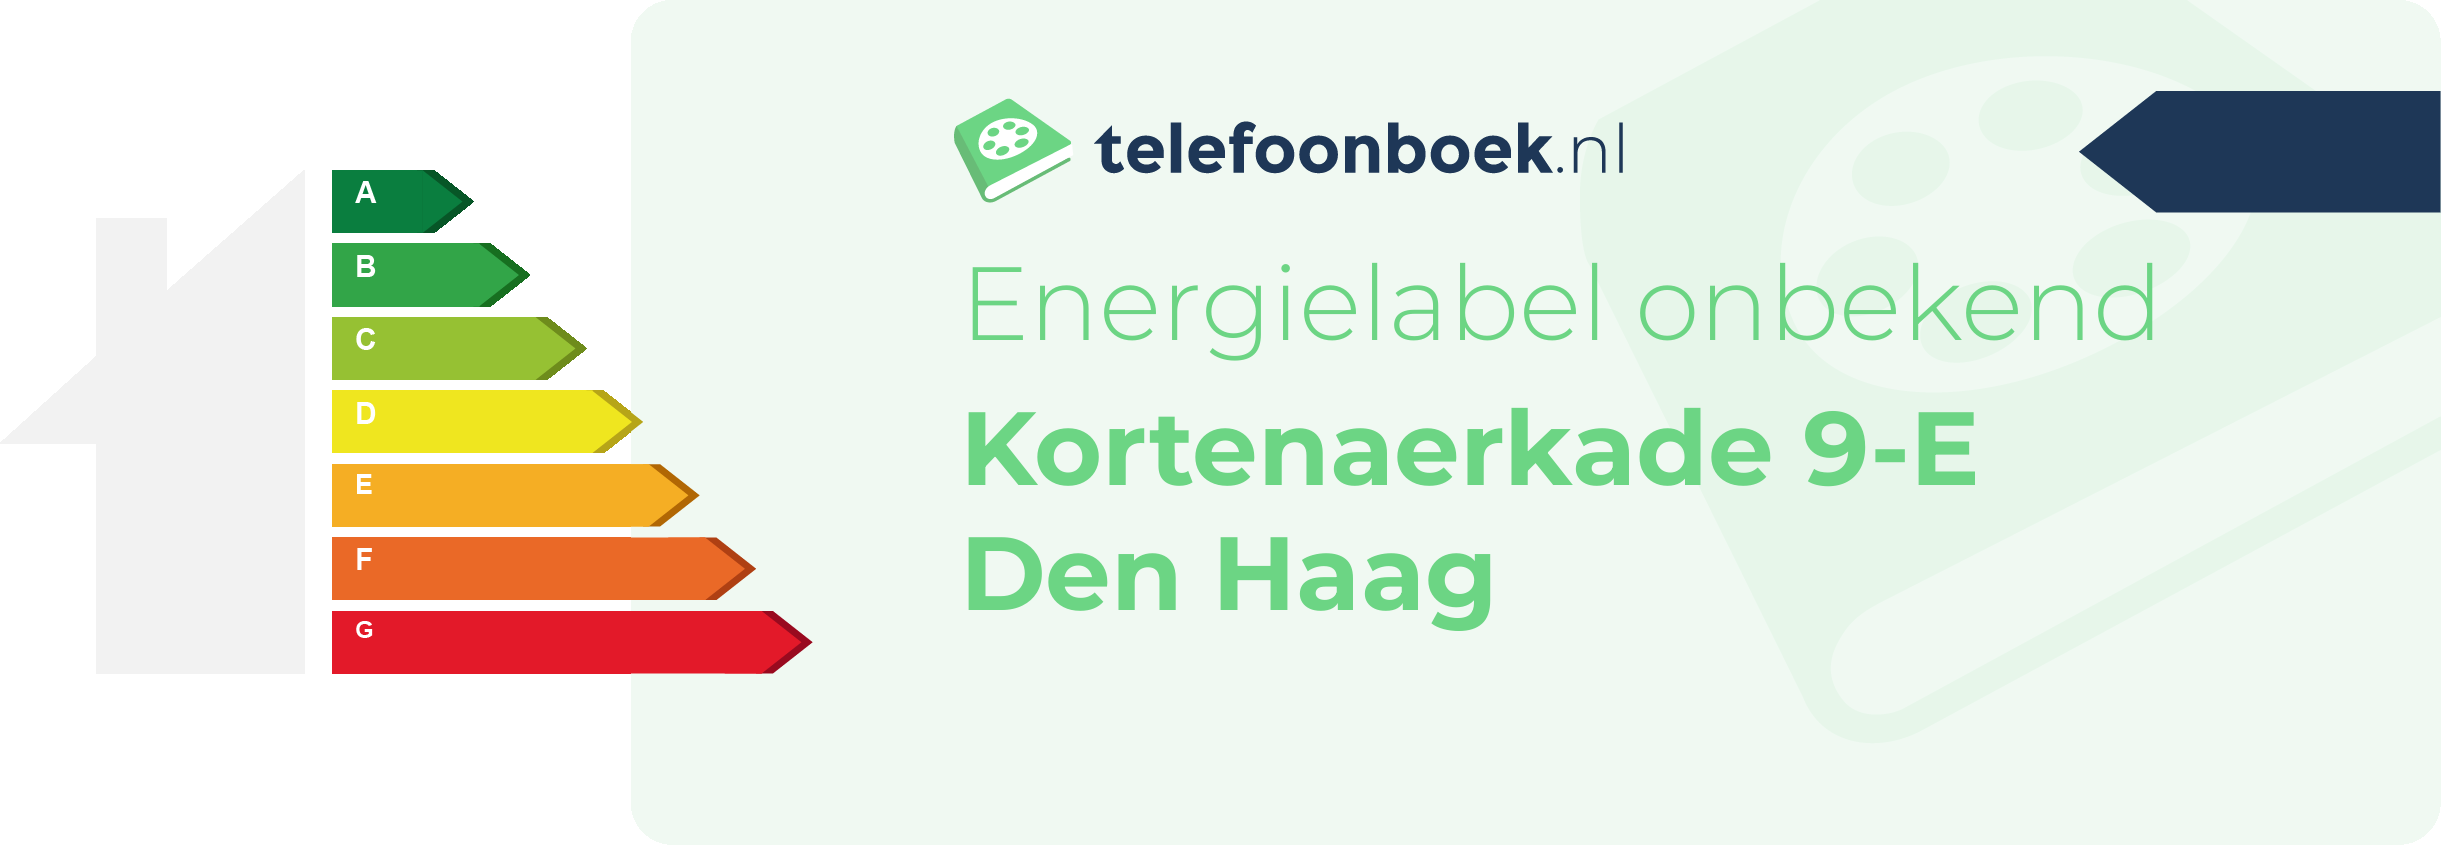 Energielabel Kortenaerkade 9-E Den Haag